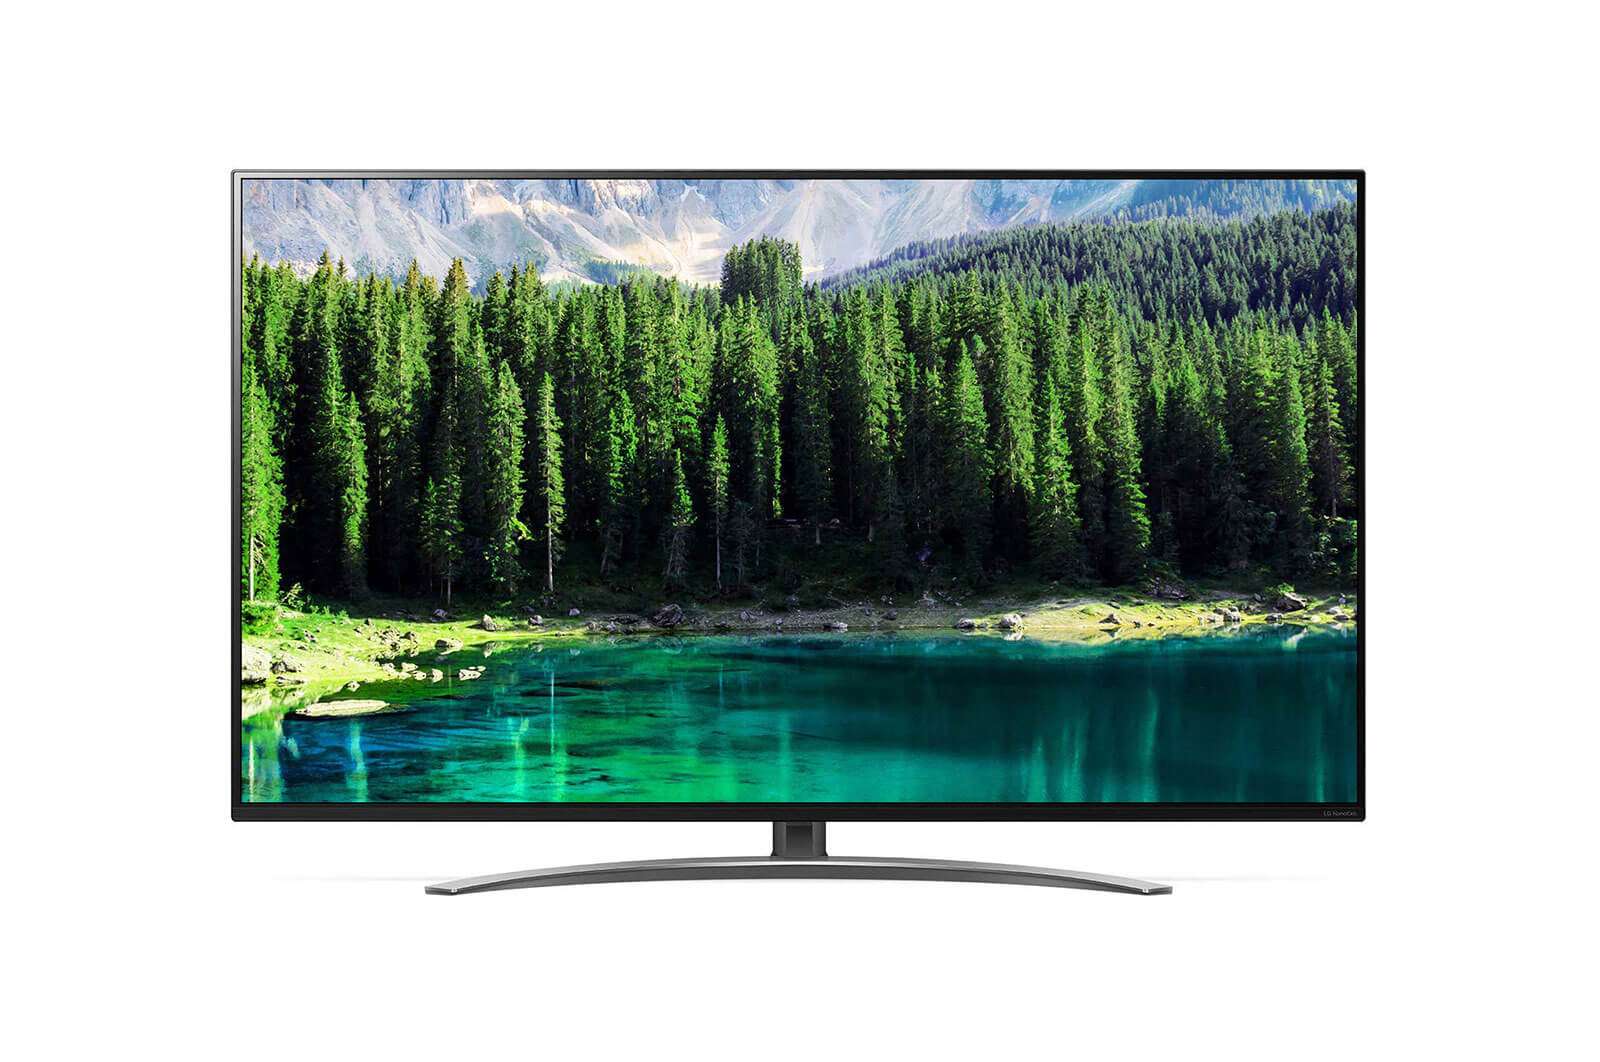 LG 55SM8600 55" 4K Ultra HD Smart LED NanoCell TV (2019), Black